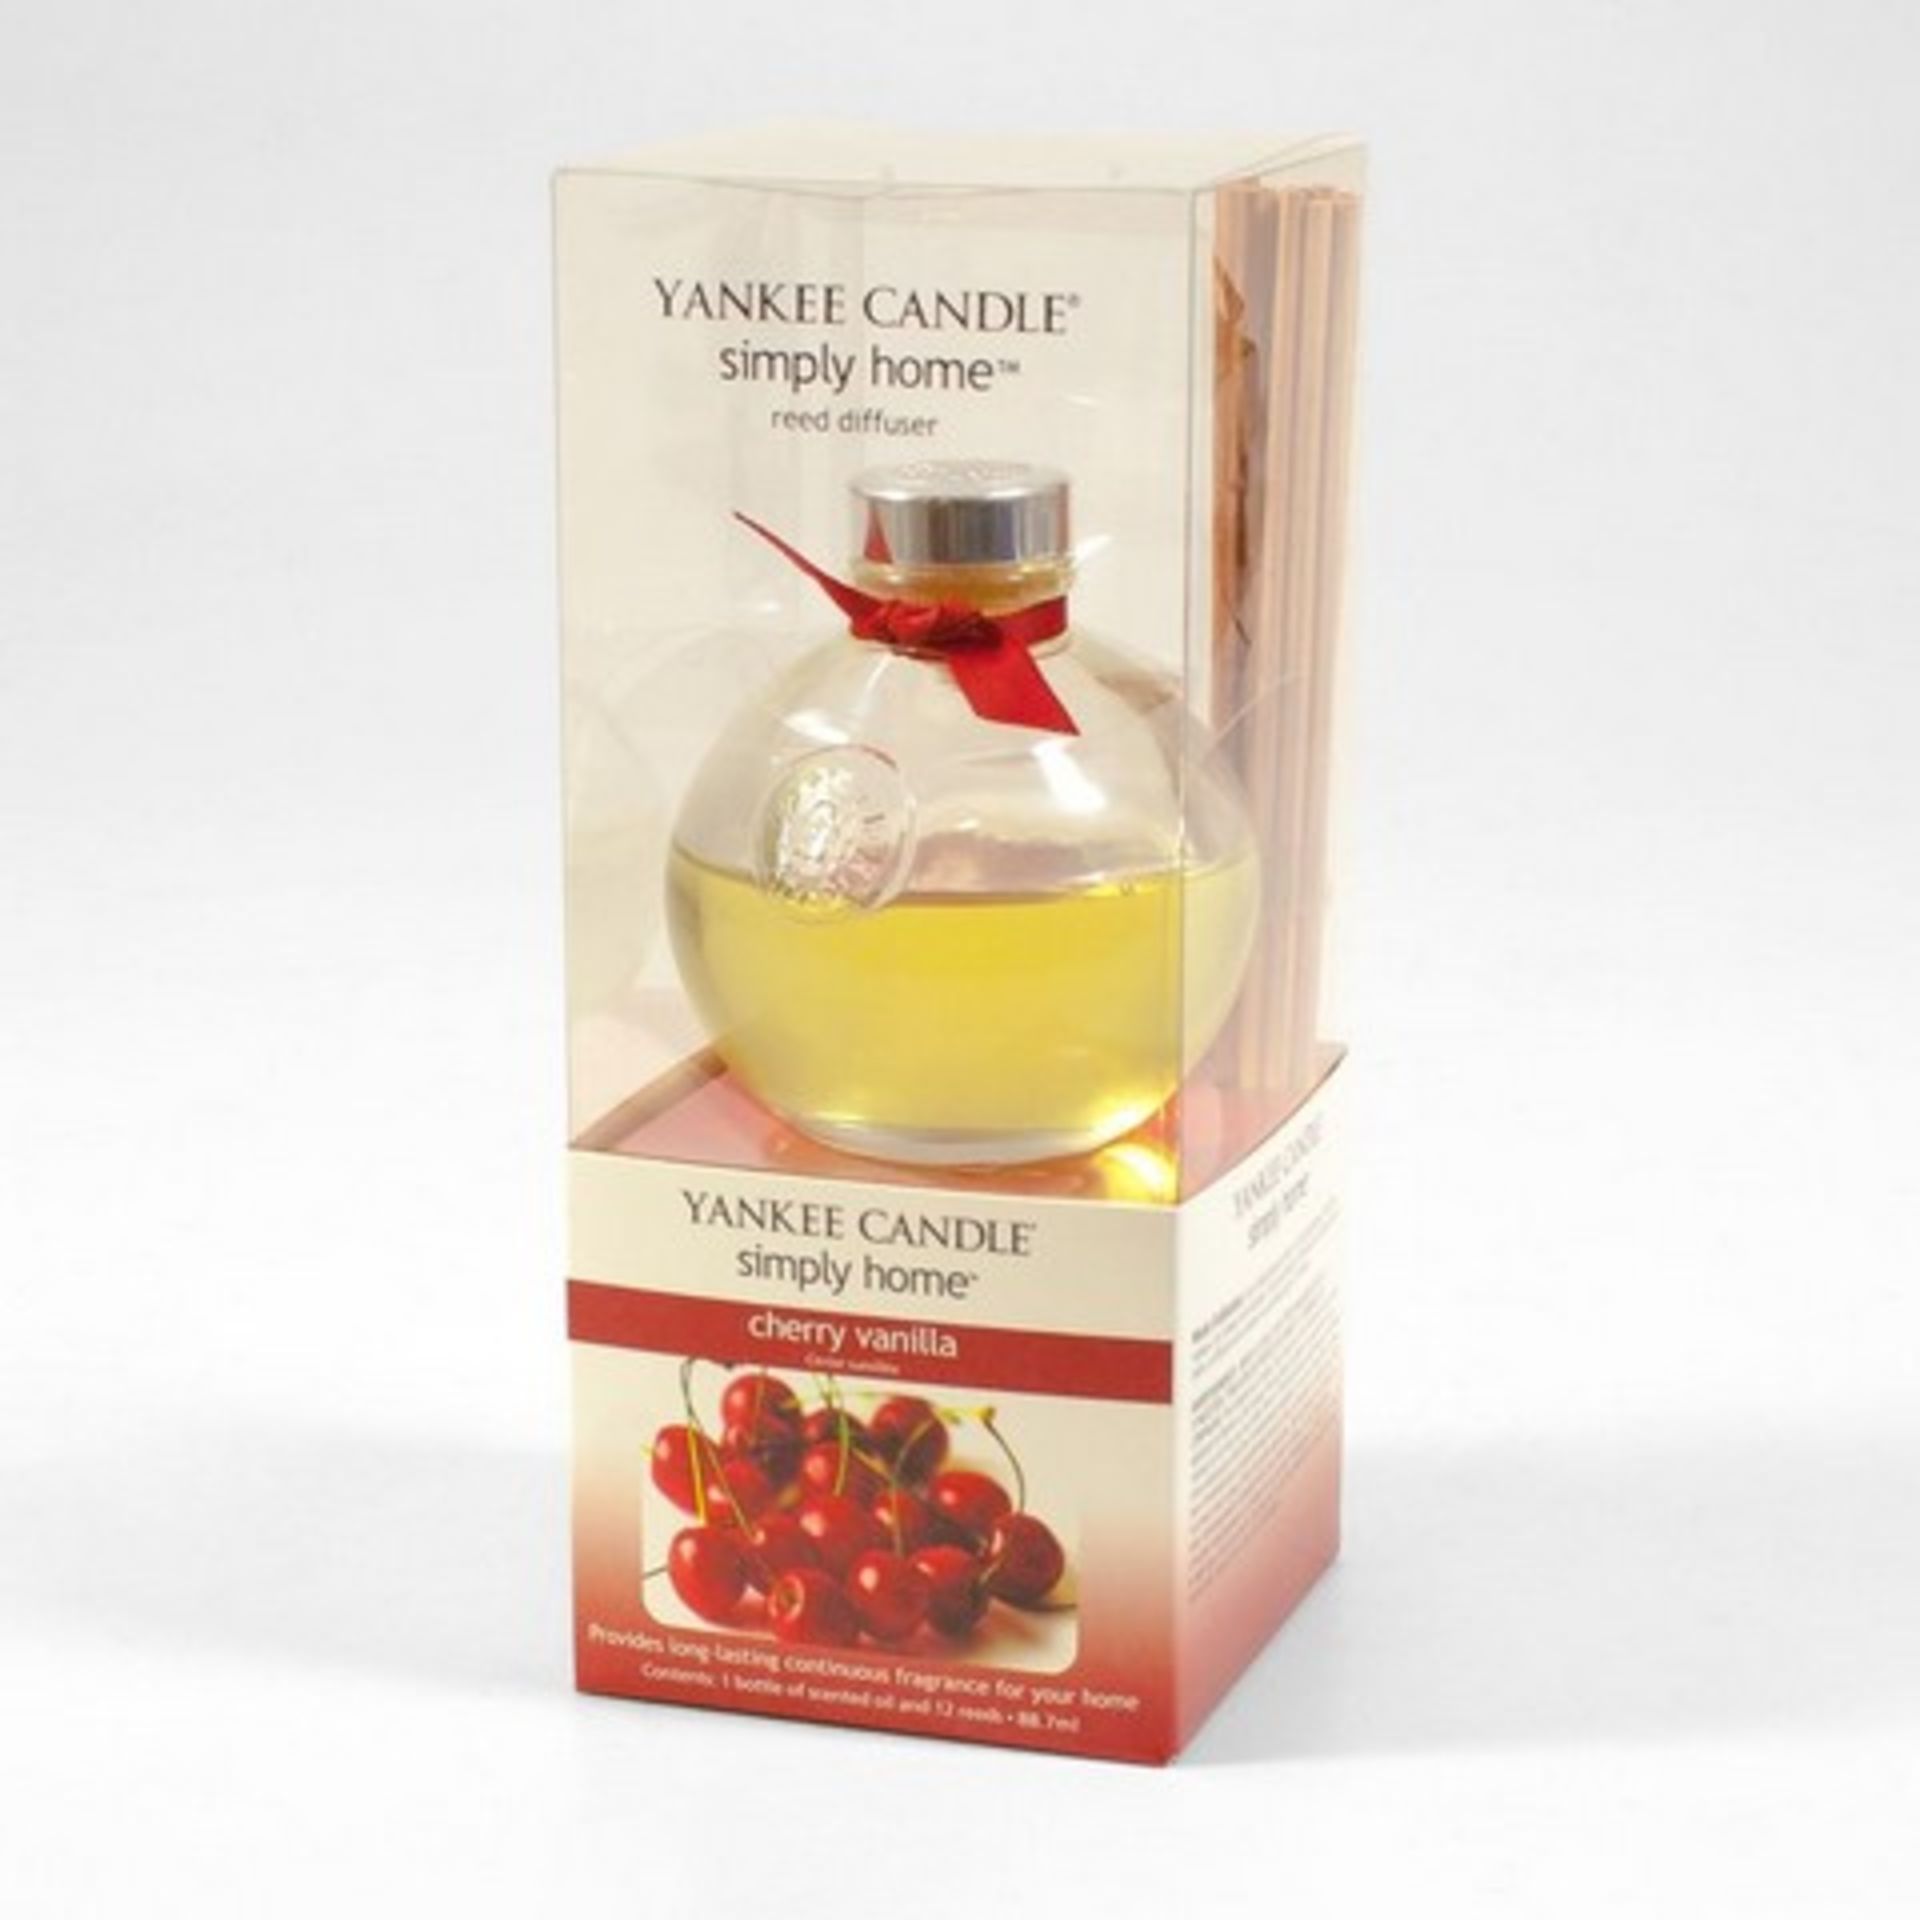 V Brand New Yankee Candle Reed Diffuser Cherry Vanilla Amazon Price £11.99